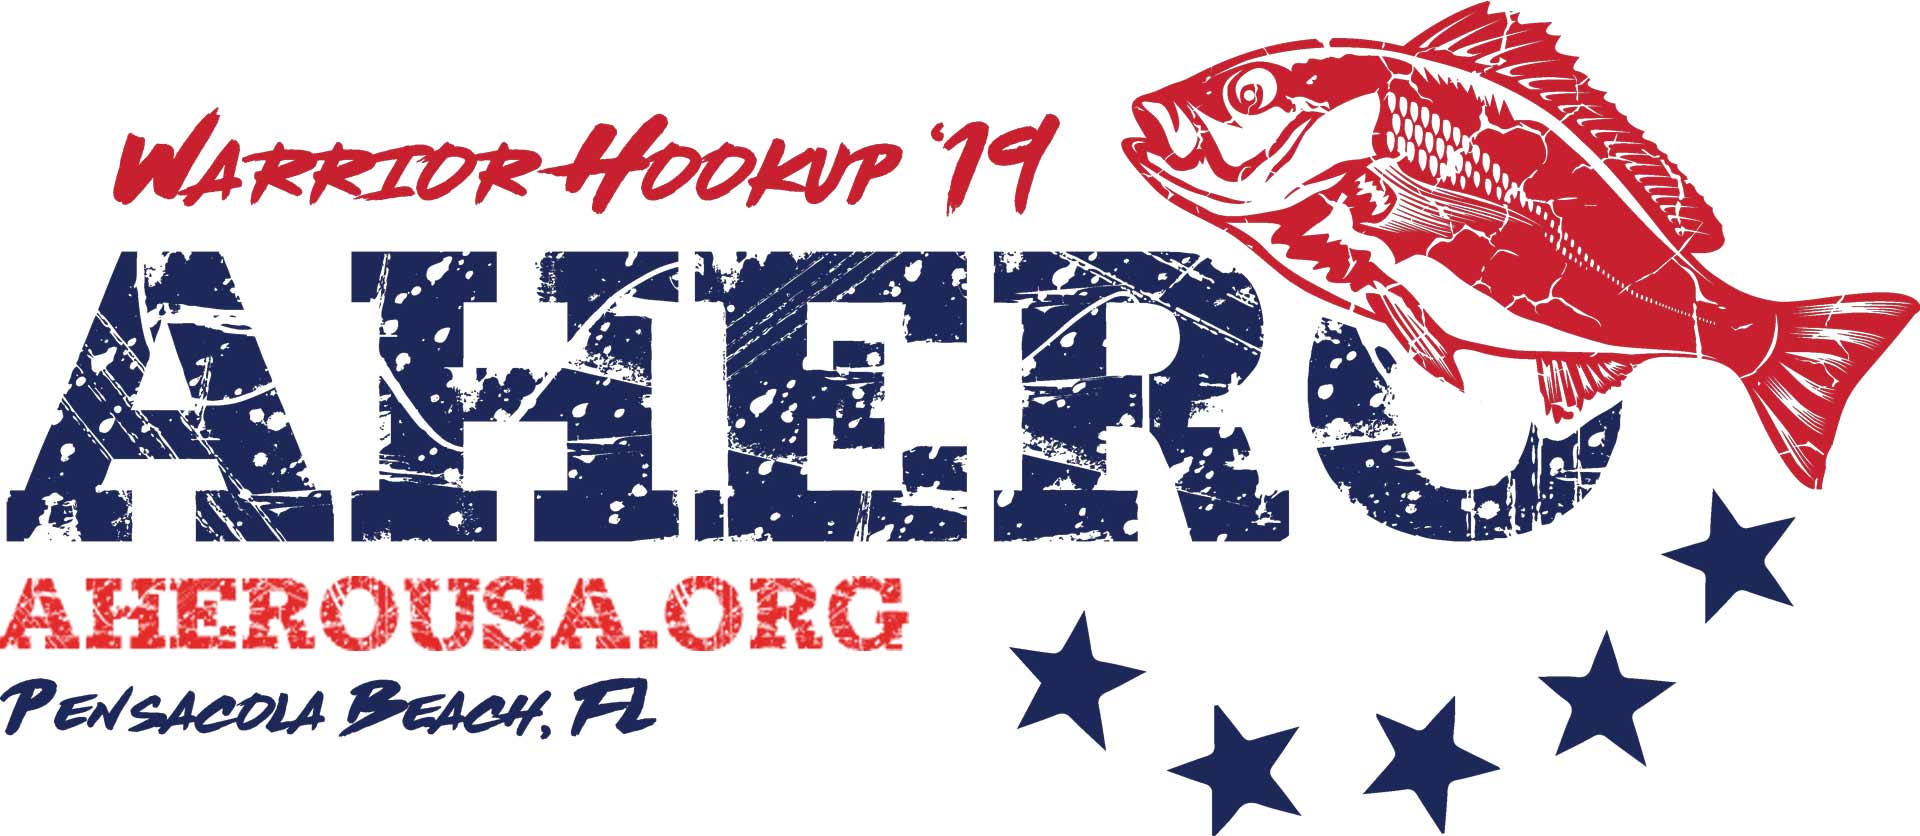 2019 AHERO Warrior Hook-Up Pensacola